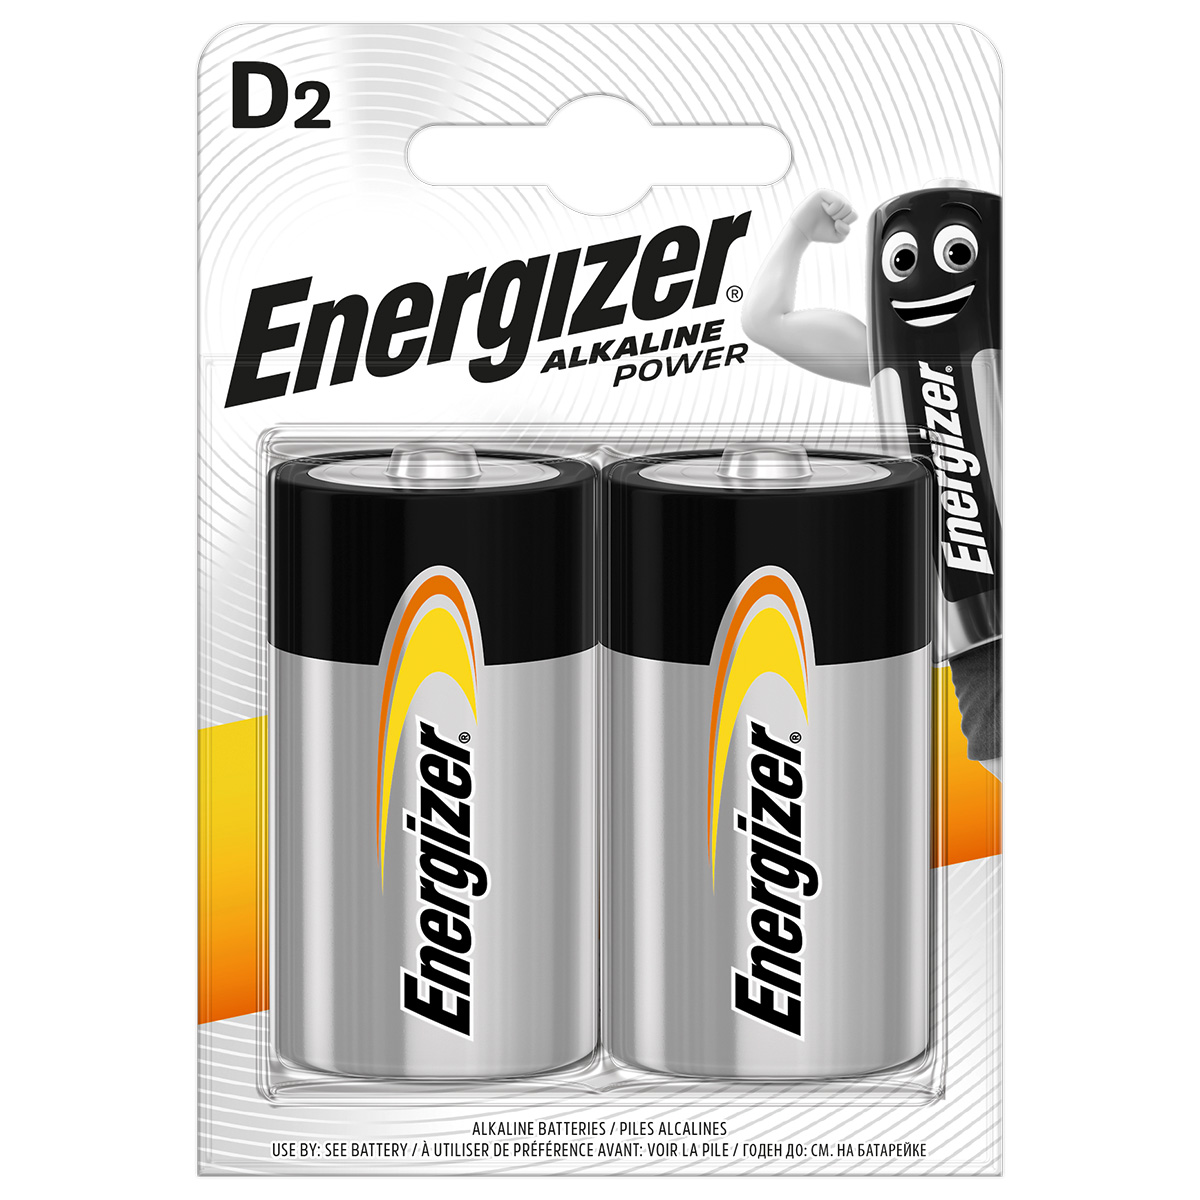 Energizer Alkaline Power batterijen grootte D/LR20/Mono/E9, 1,5 Volt, blister van 2 stuks